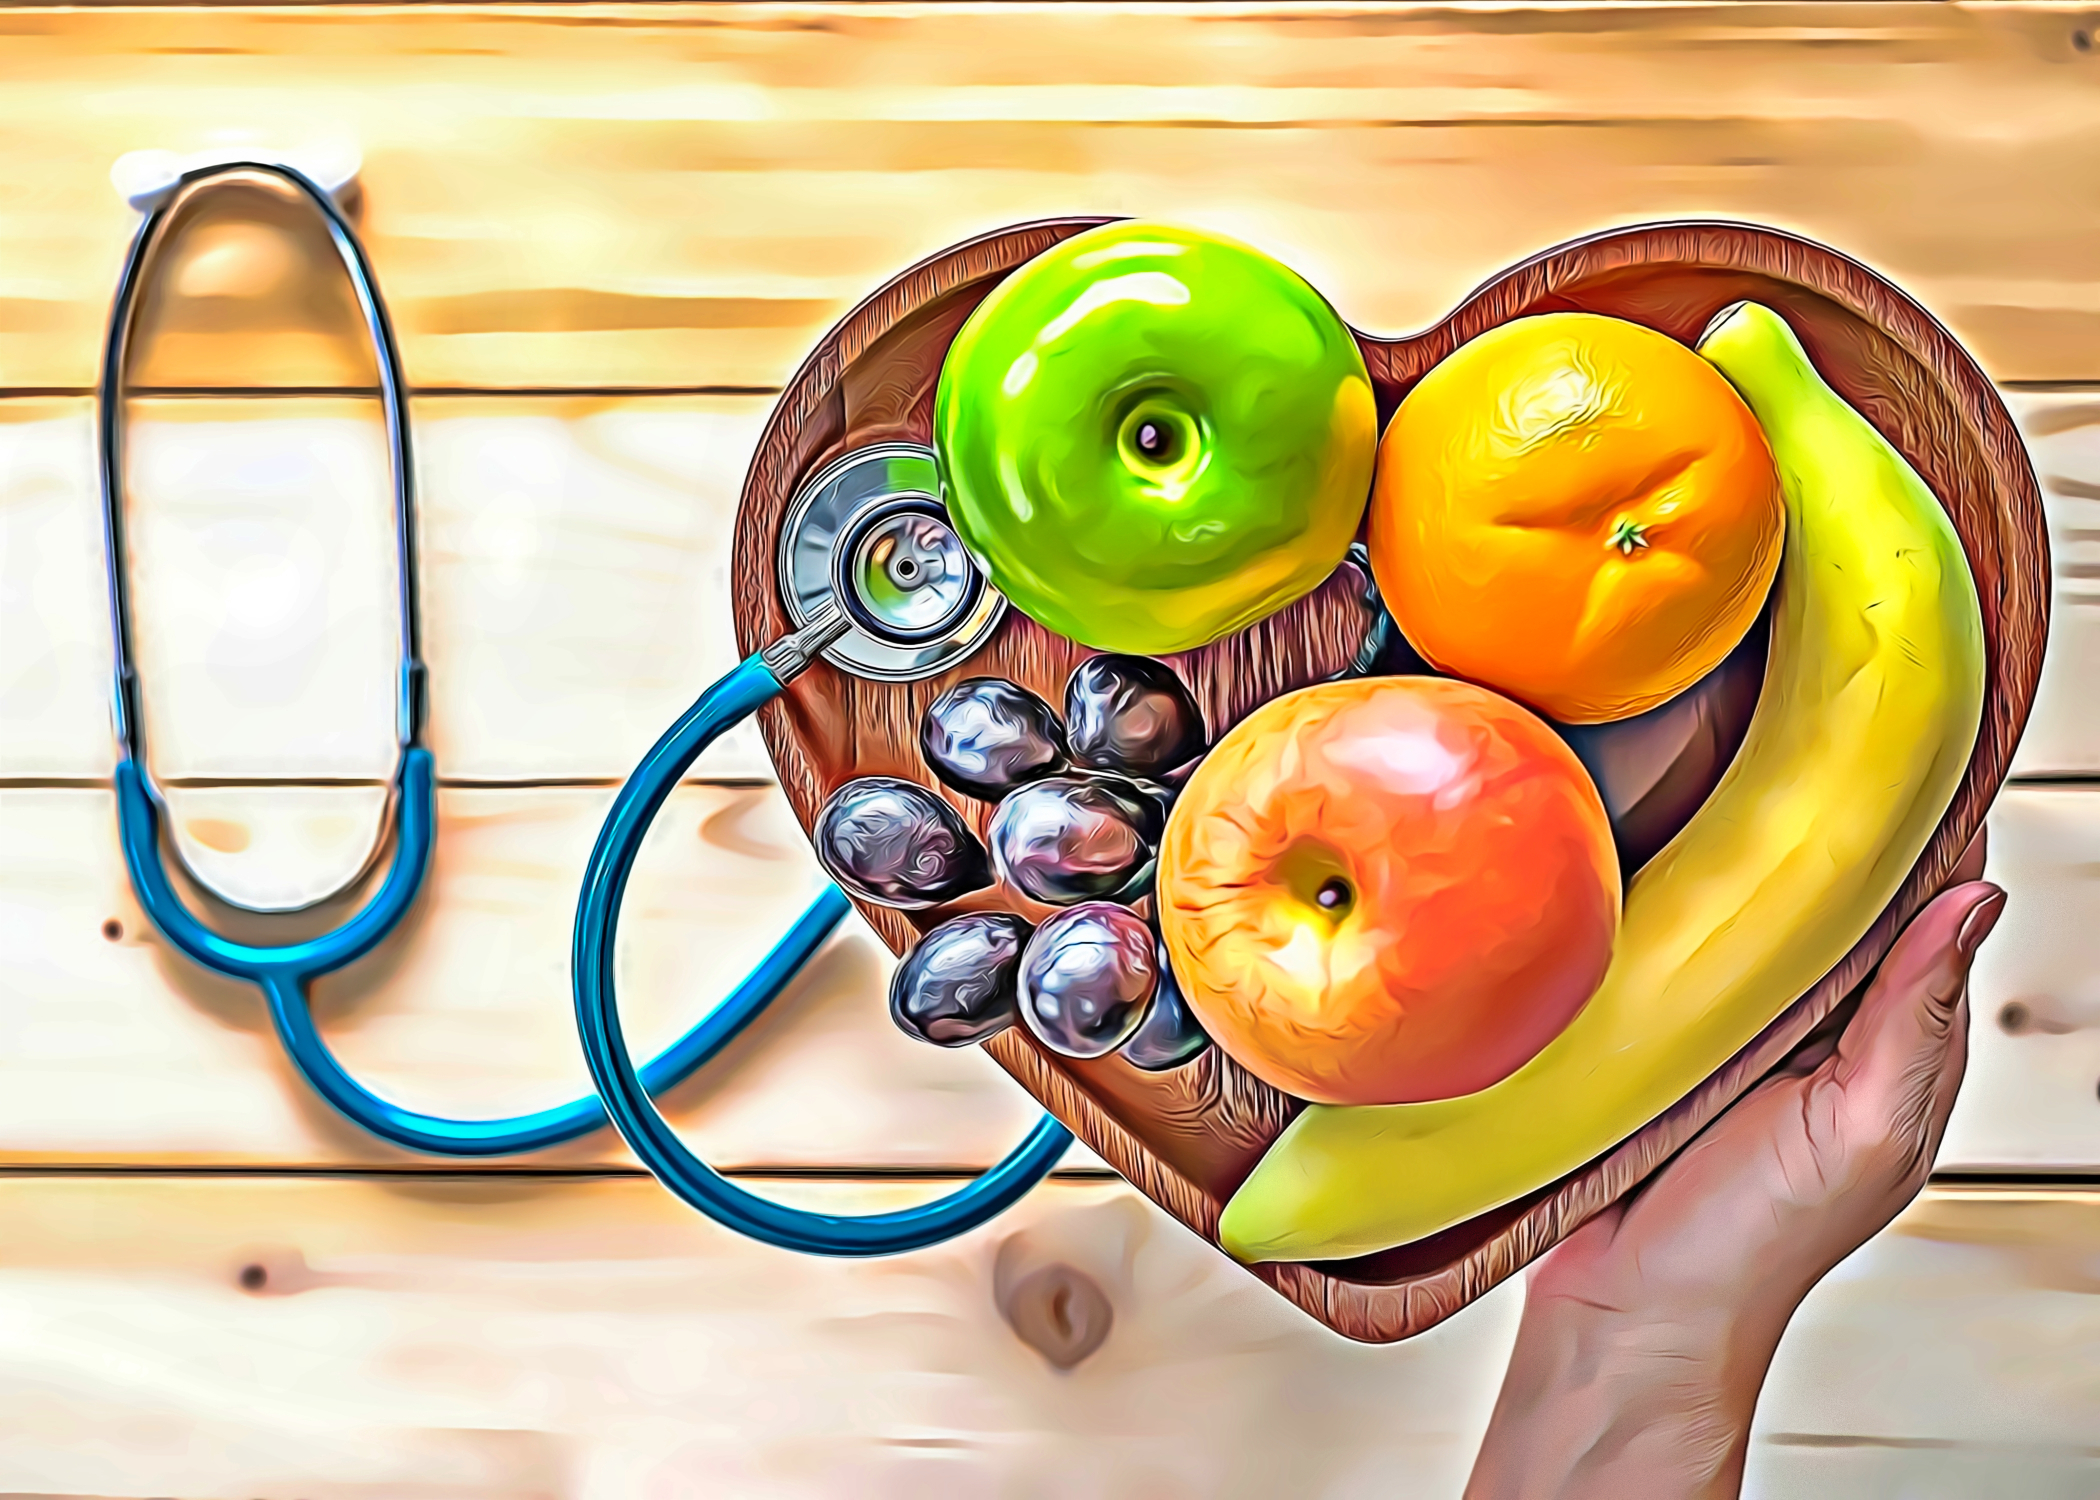 Artwork ArtStation Digital Art Fruit Bananas Apples Food Illustration Painting Drawing Stethoscope 2100x1500